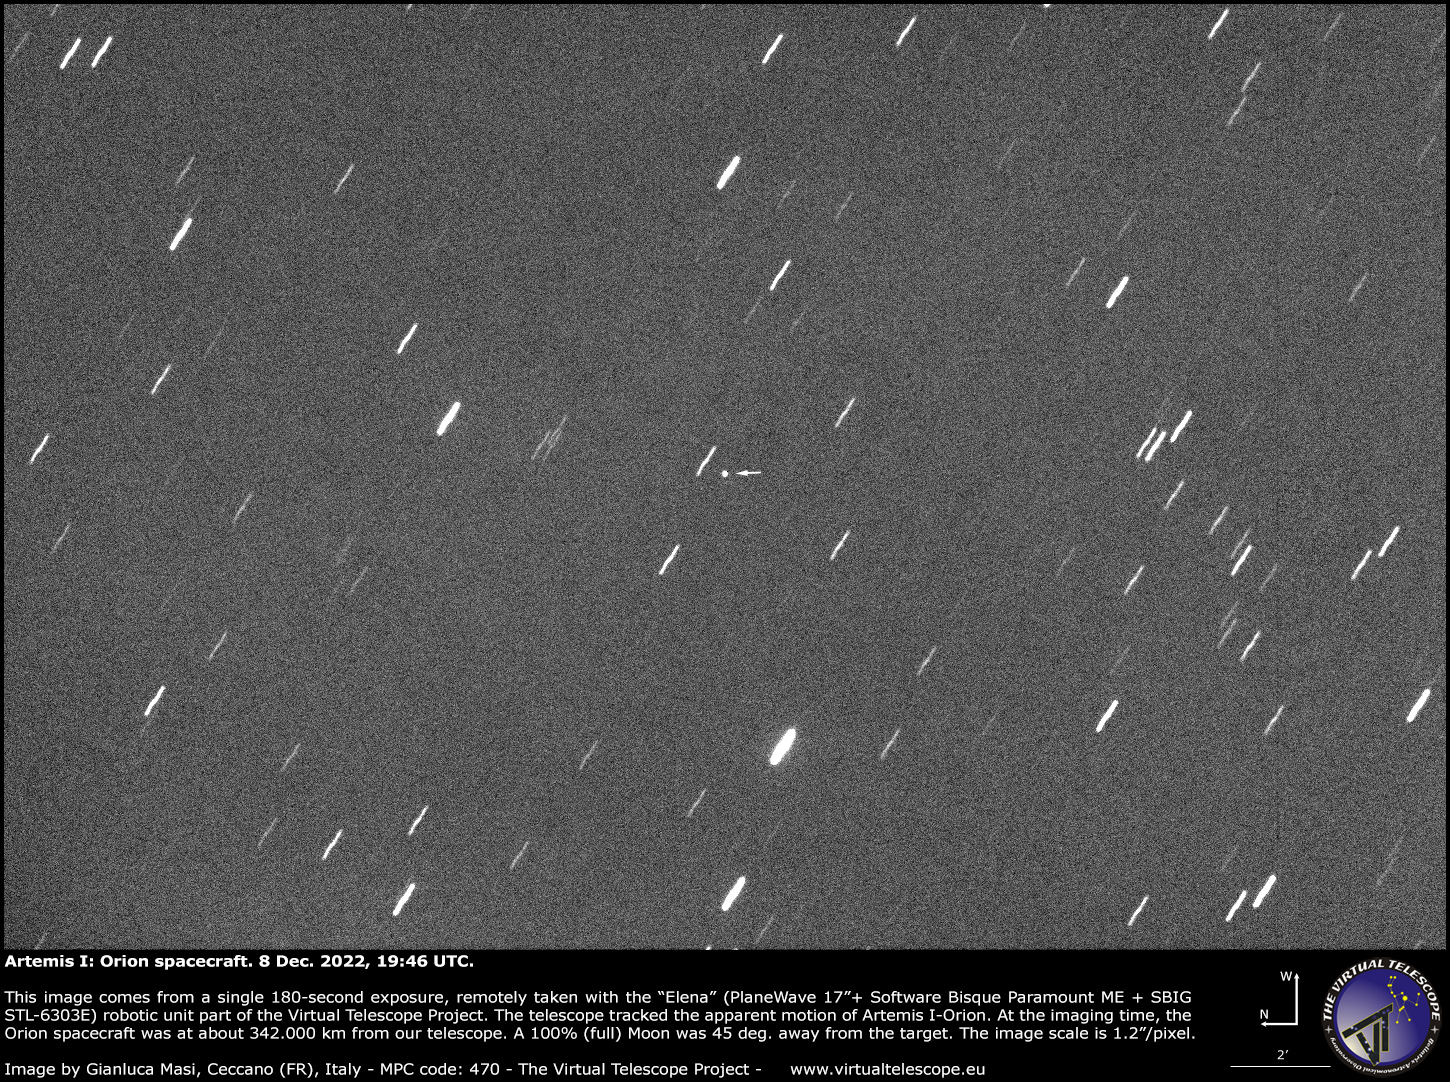 The Artemis I - Orion spacecraft imaged on 8 Dec. 2022.